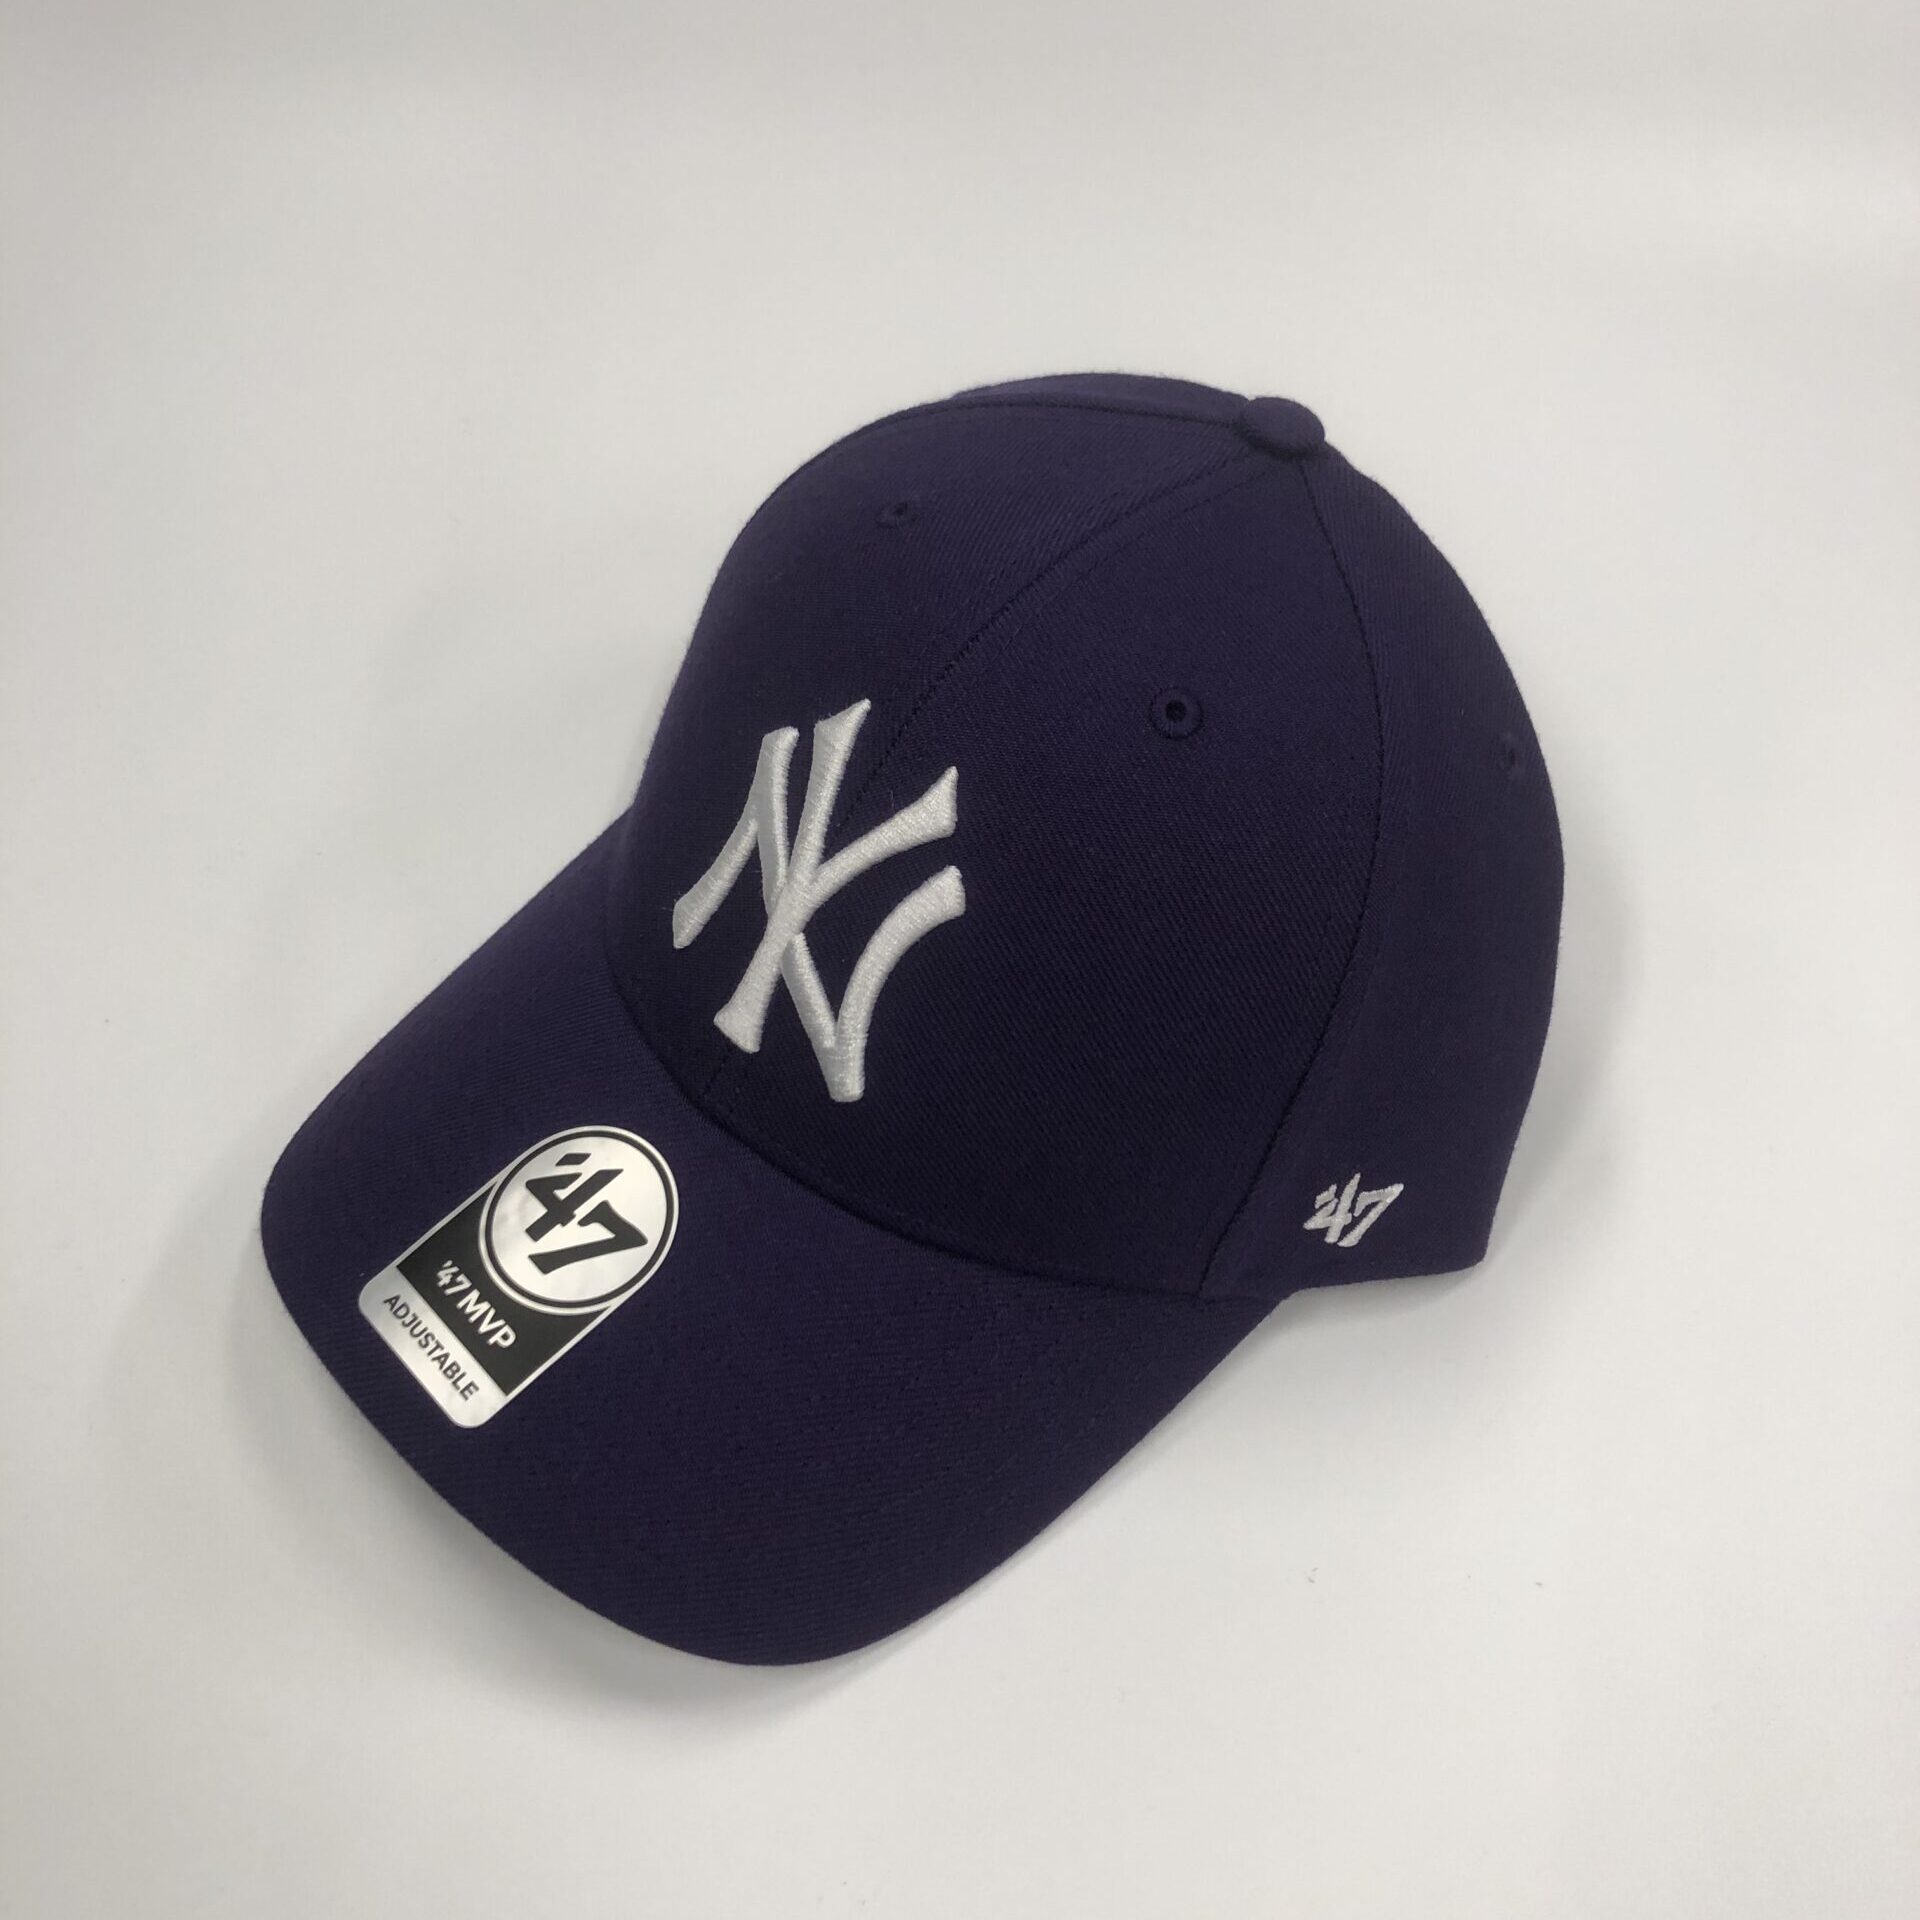 Yankees’47 MVP Purple